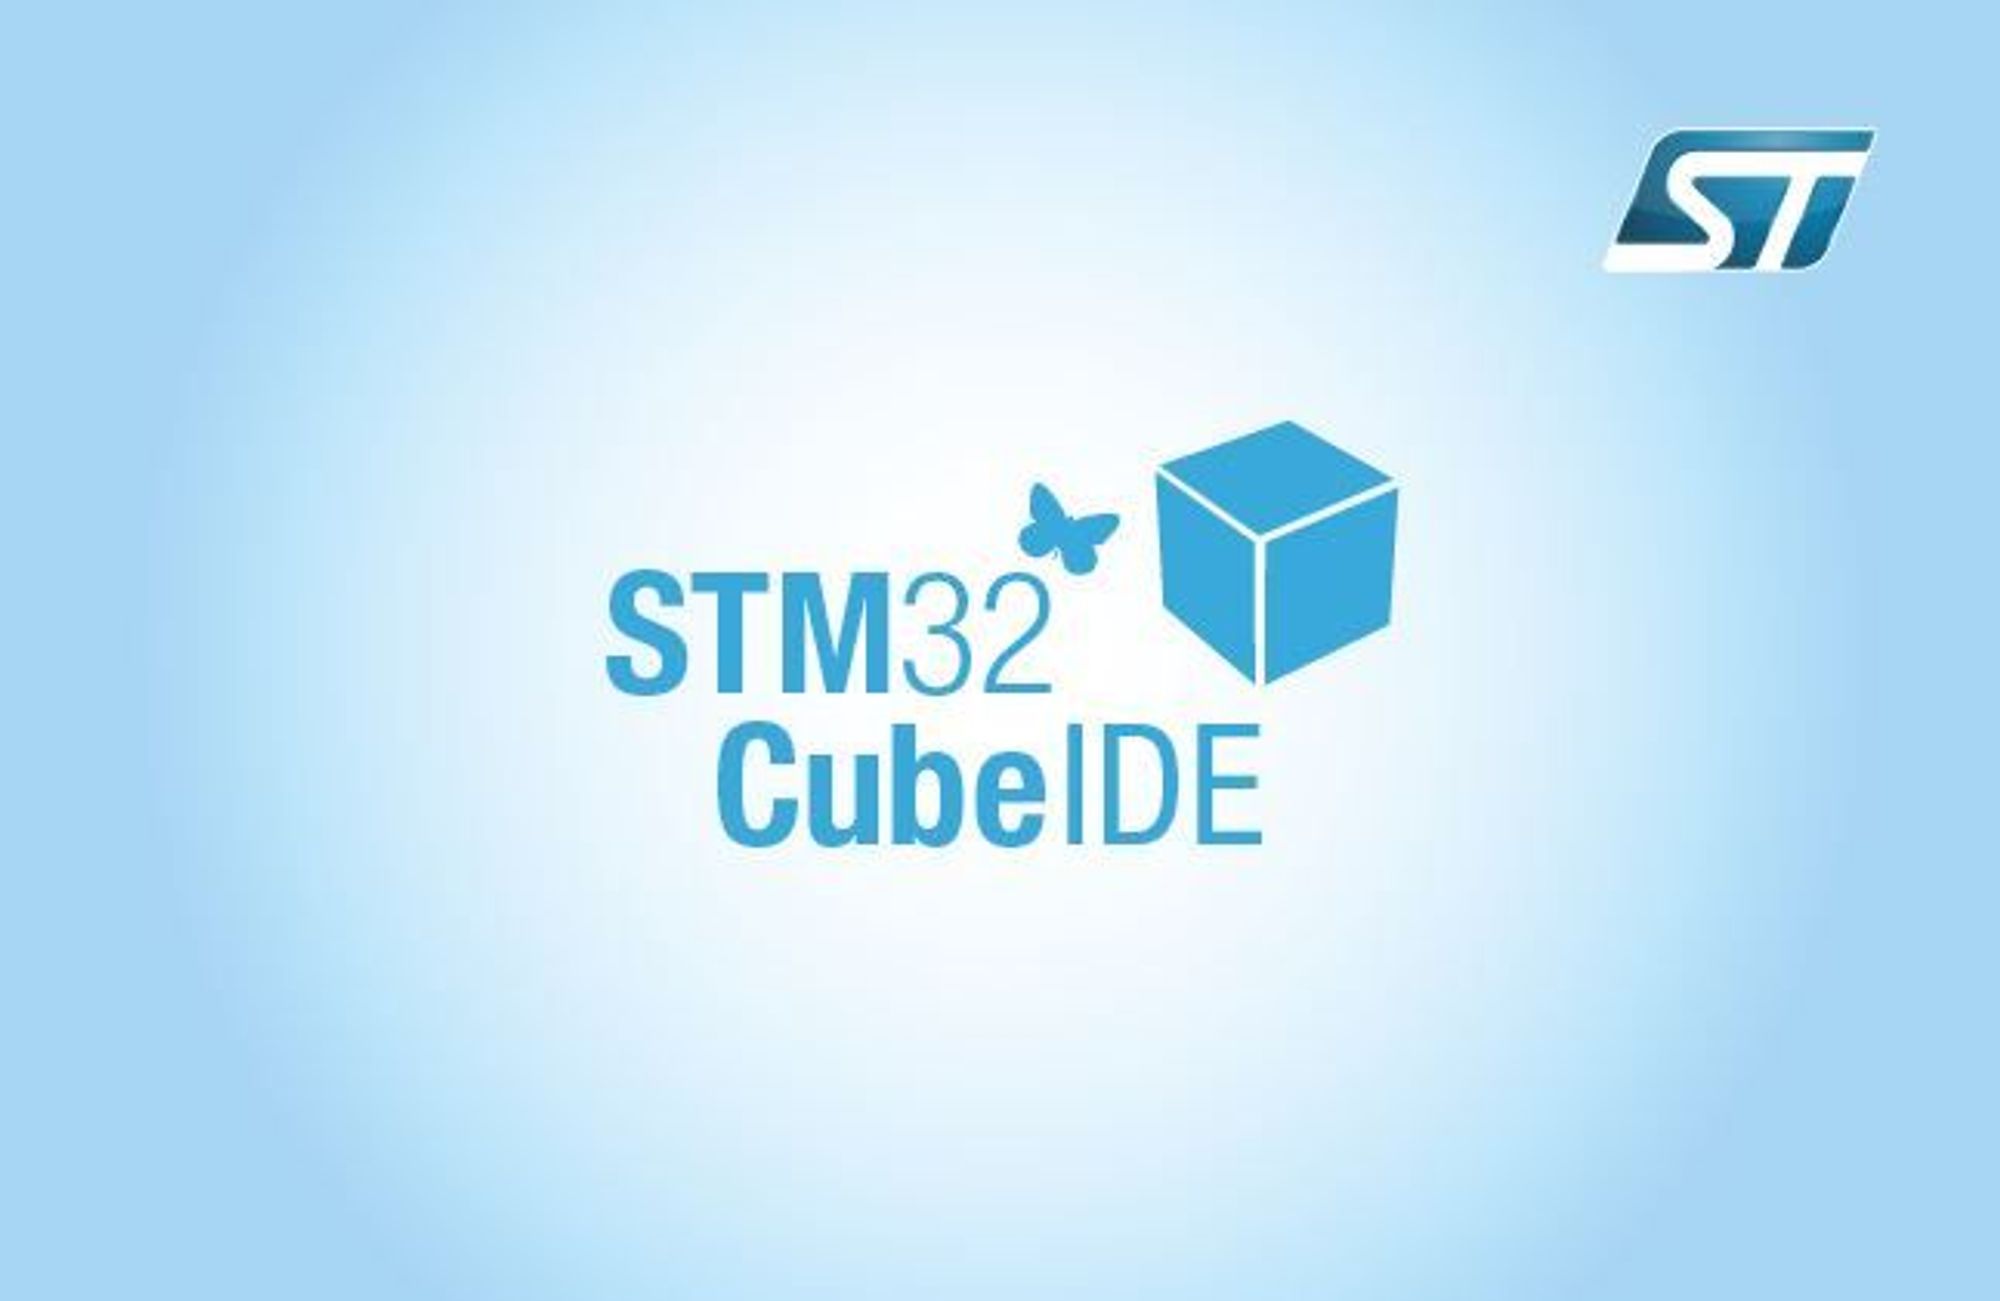 Stm cube. Stm32cubemx ide. Cube MX stm32. Stm32 Cube ide. Stm32cubeide stm32cubemx.